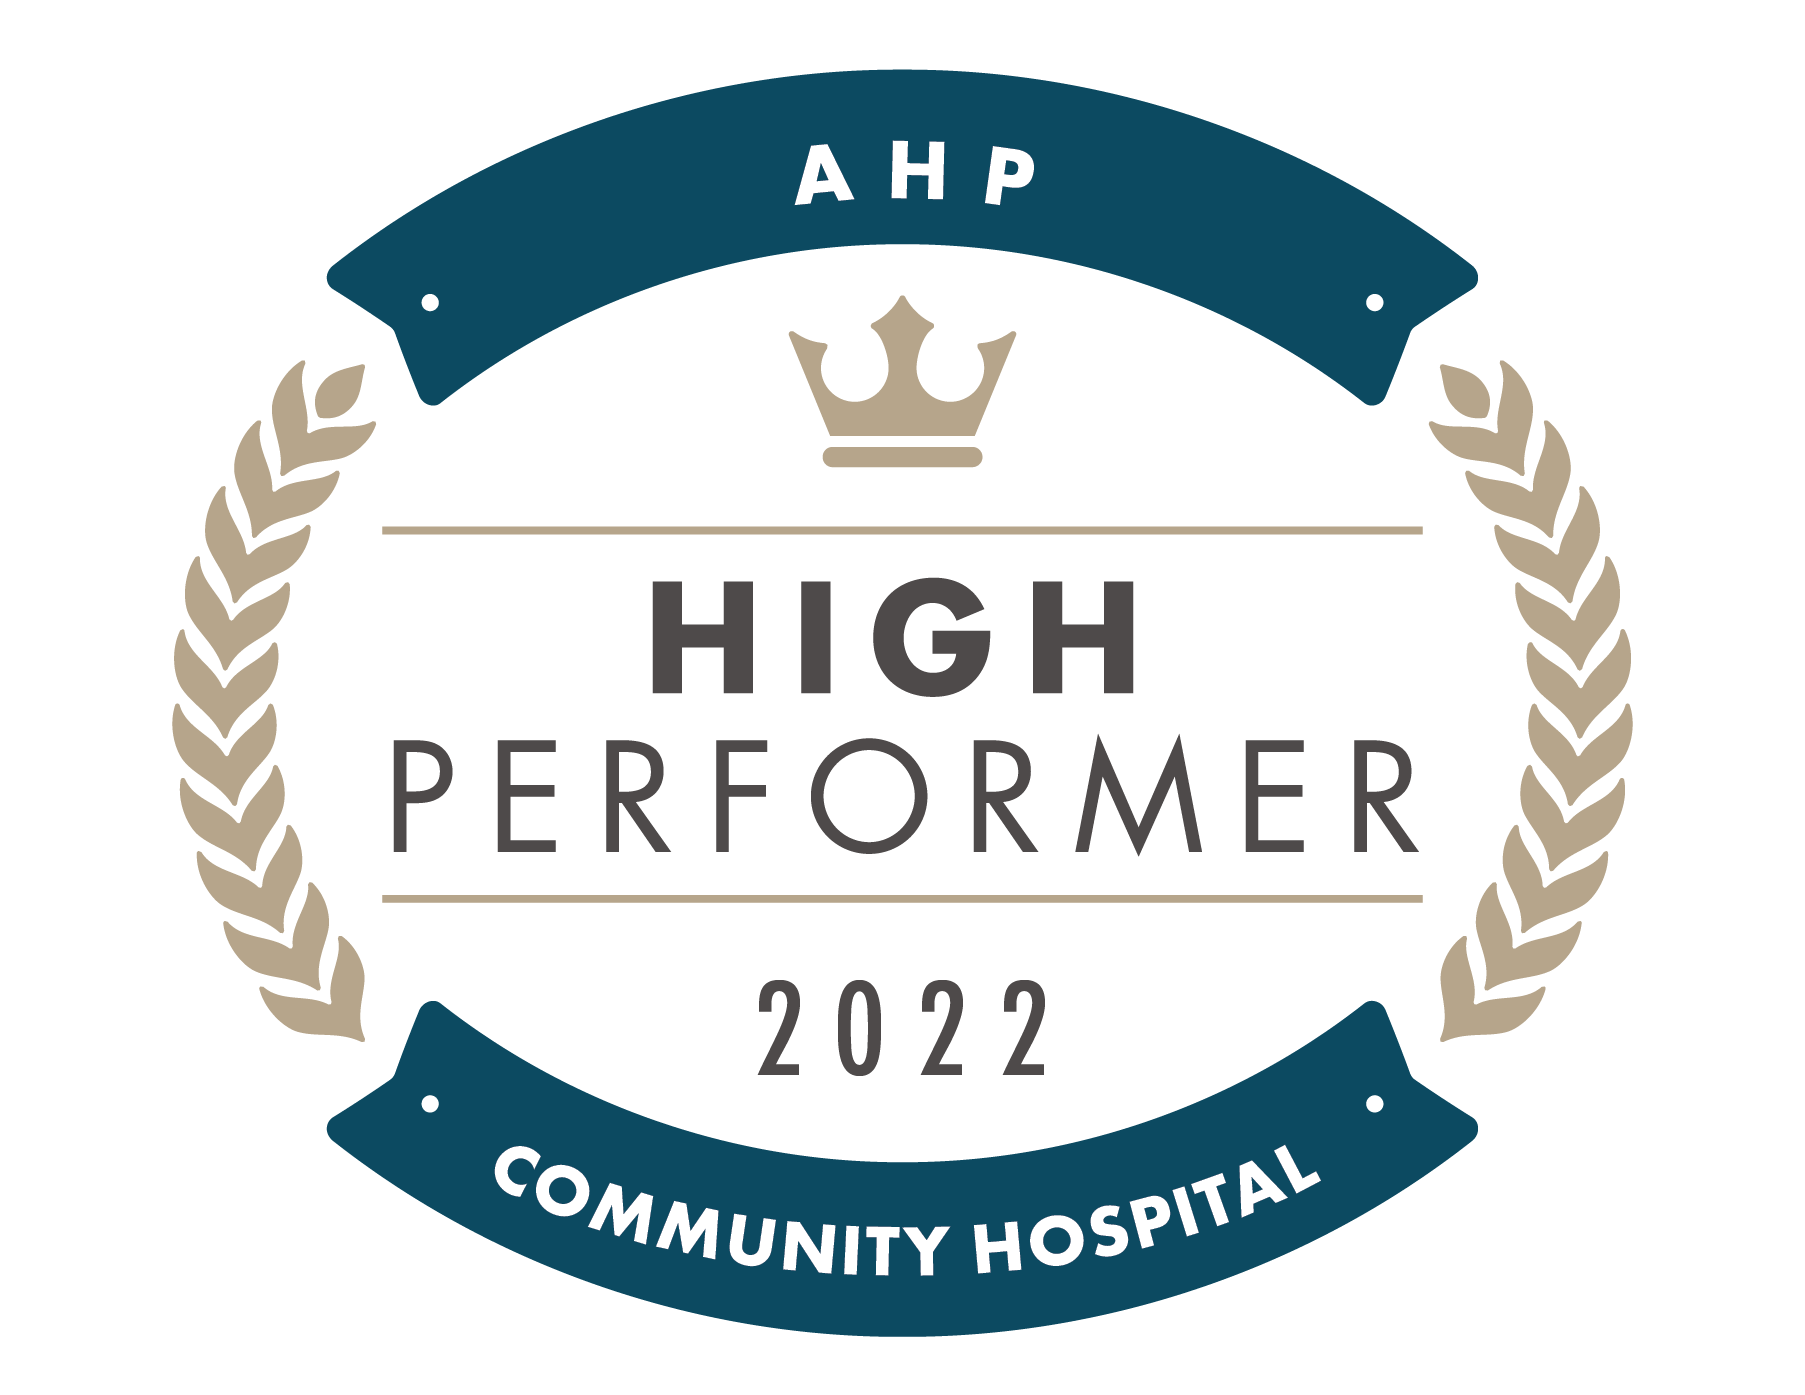 AHP High Performer award